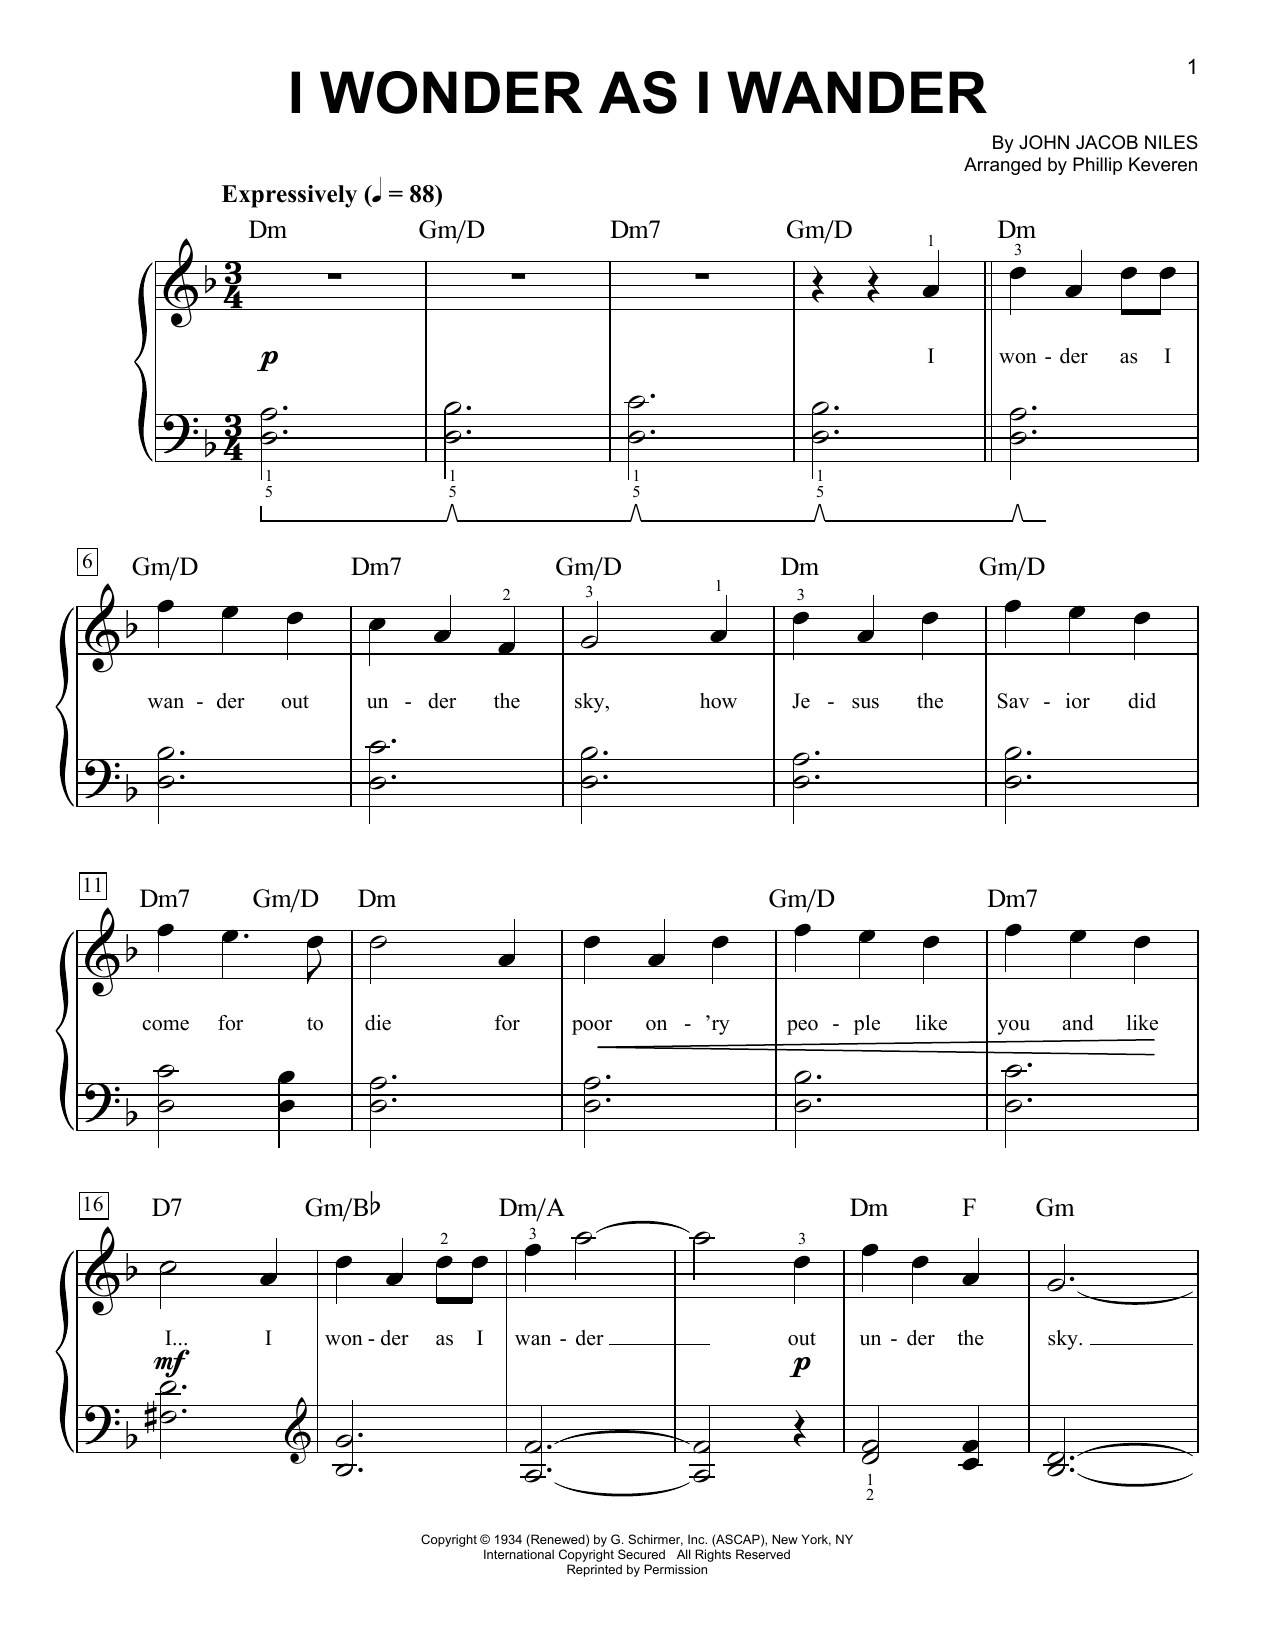 John Jacob Niles I Wonder As I Wander (arr. Phillip Keveren) Sheet Music Notes & Chords for Easy Piano - Download or Print PDF